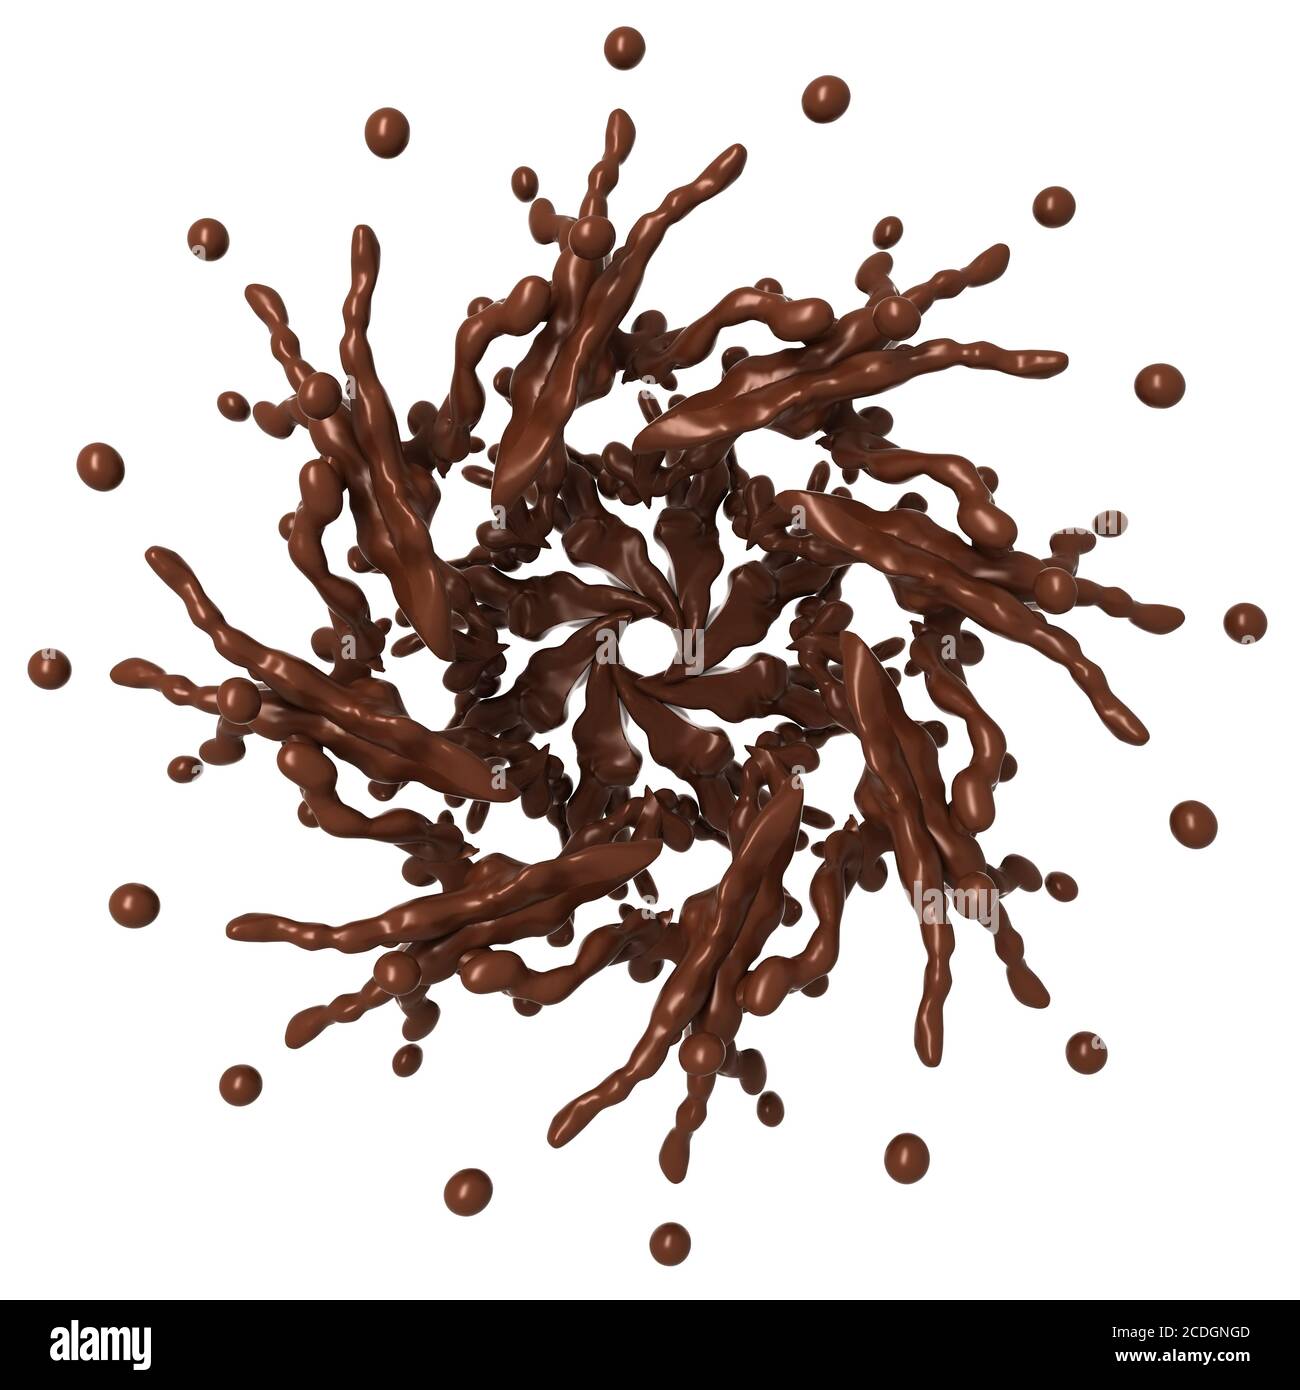 Sweet Splashes: Liquid chocolate star shape with drops Stock Photo